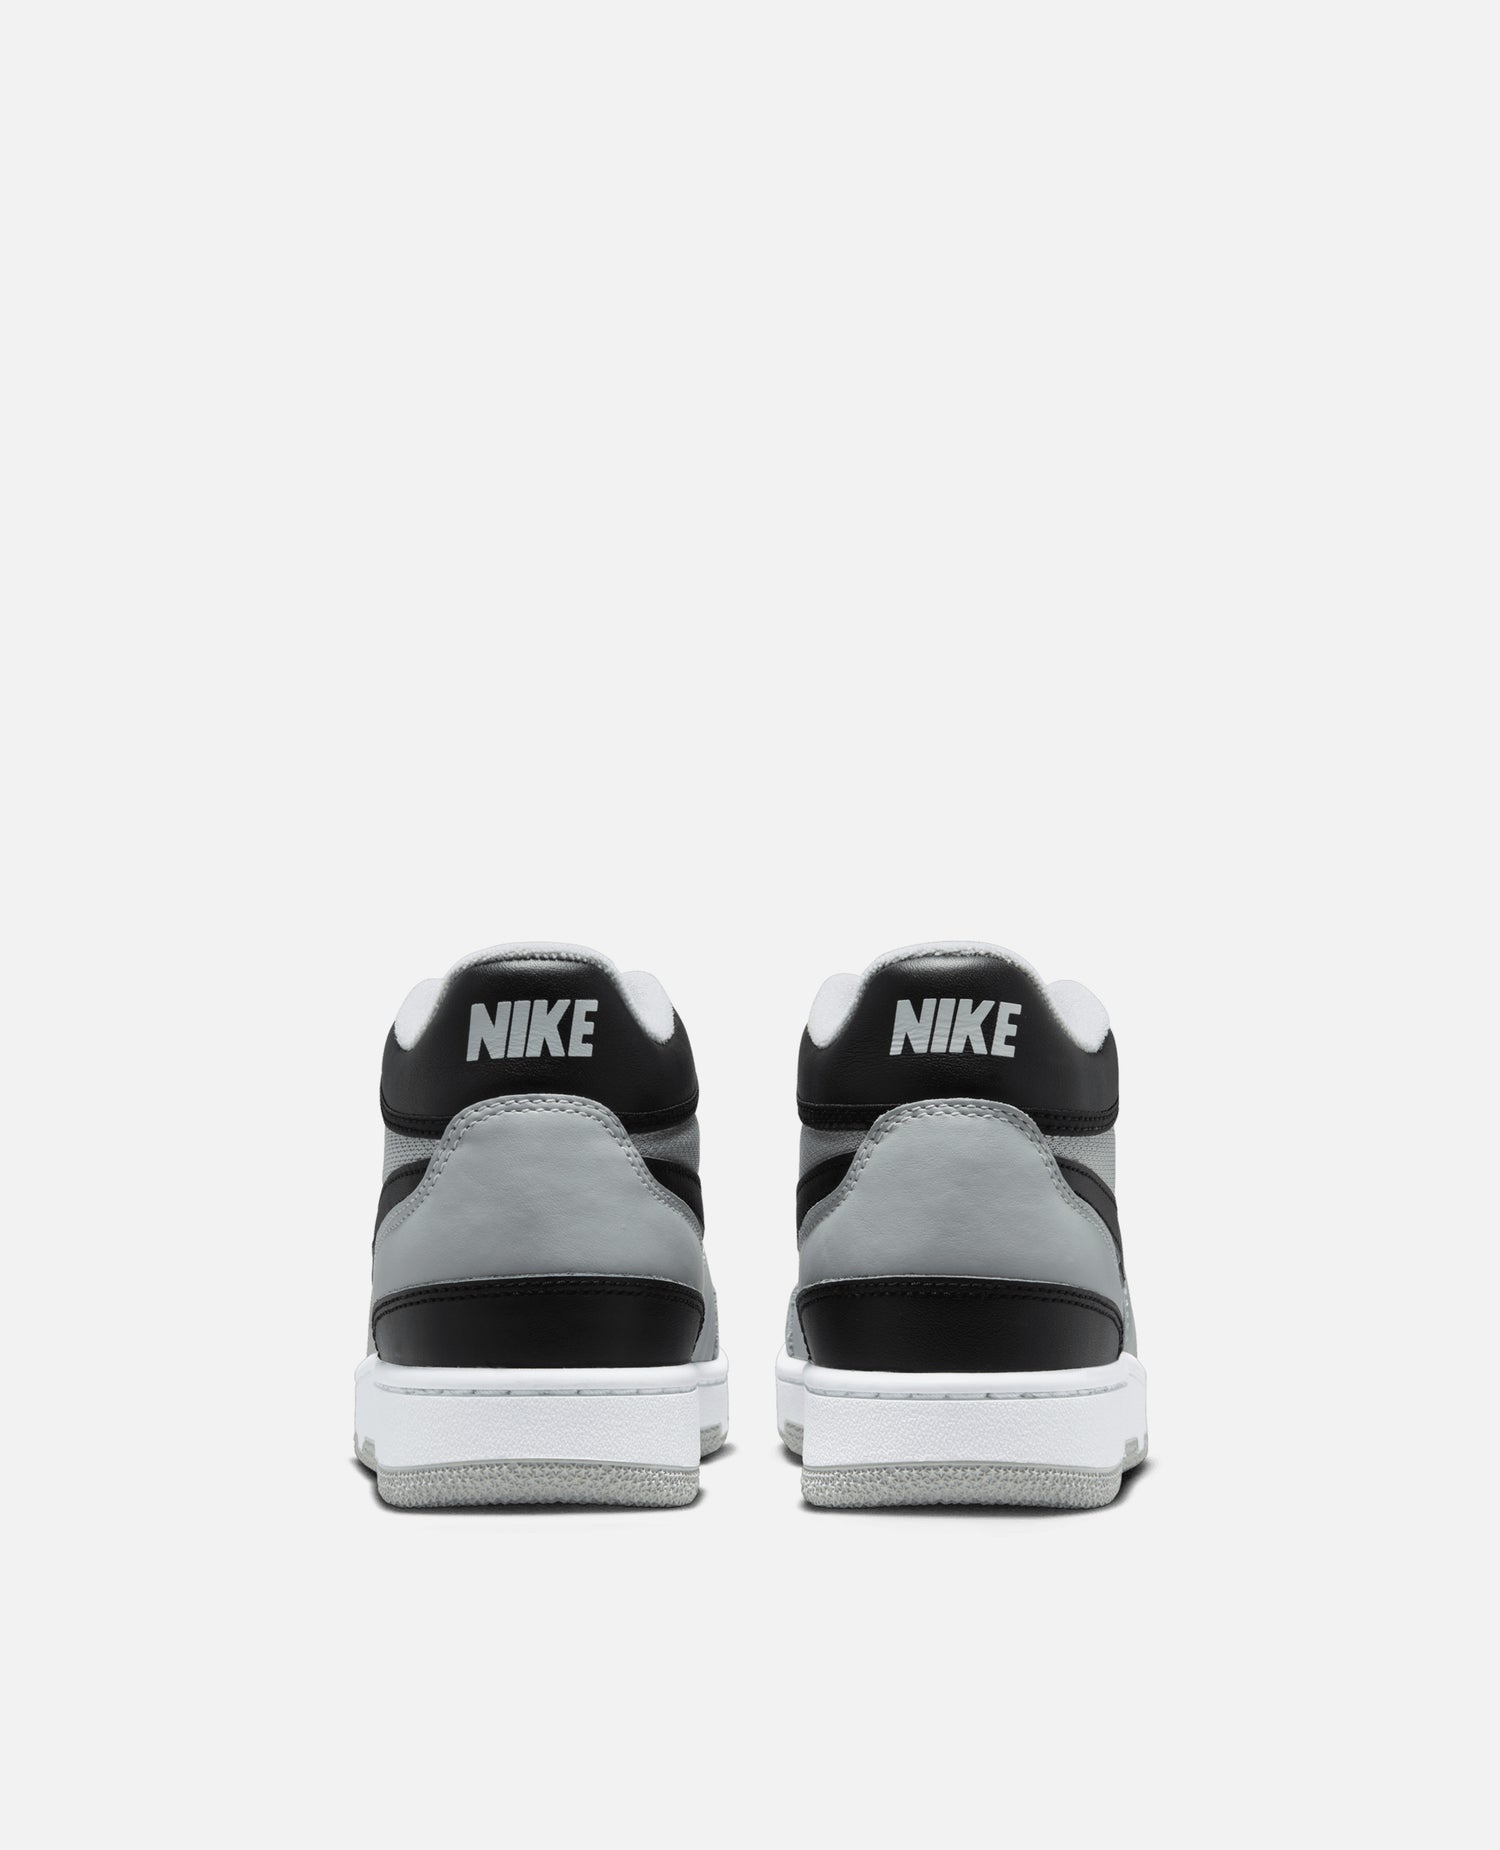 Nike Attack Qs Sp (Lt Smoke Grey/Black-White)